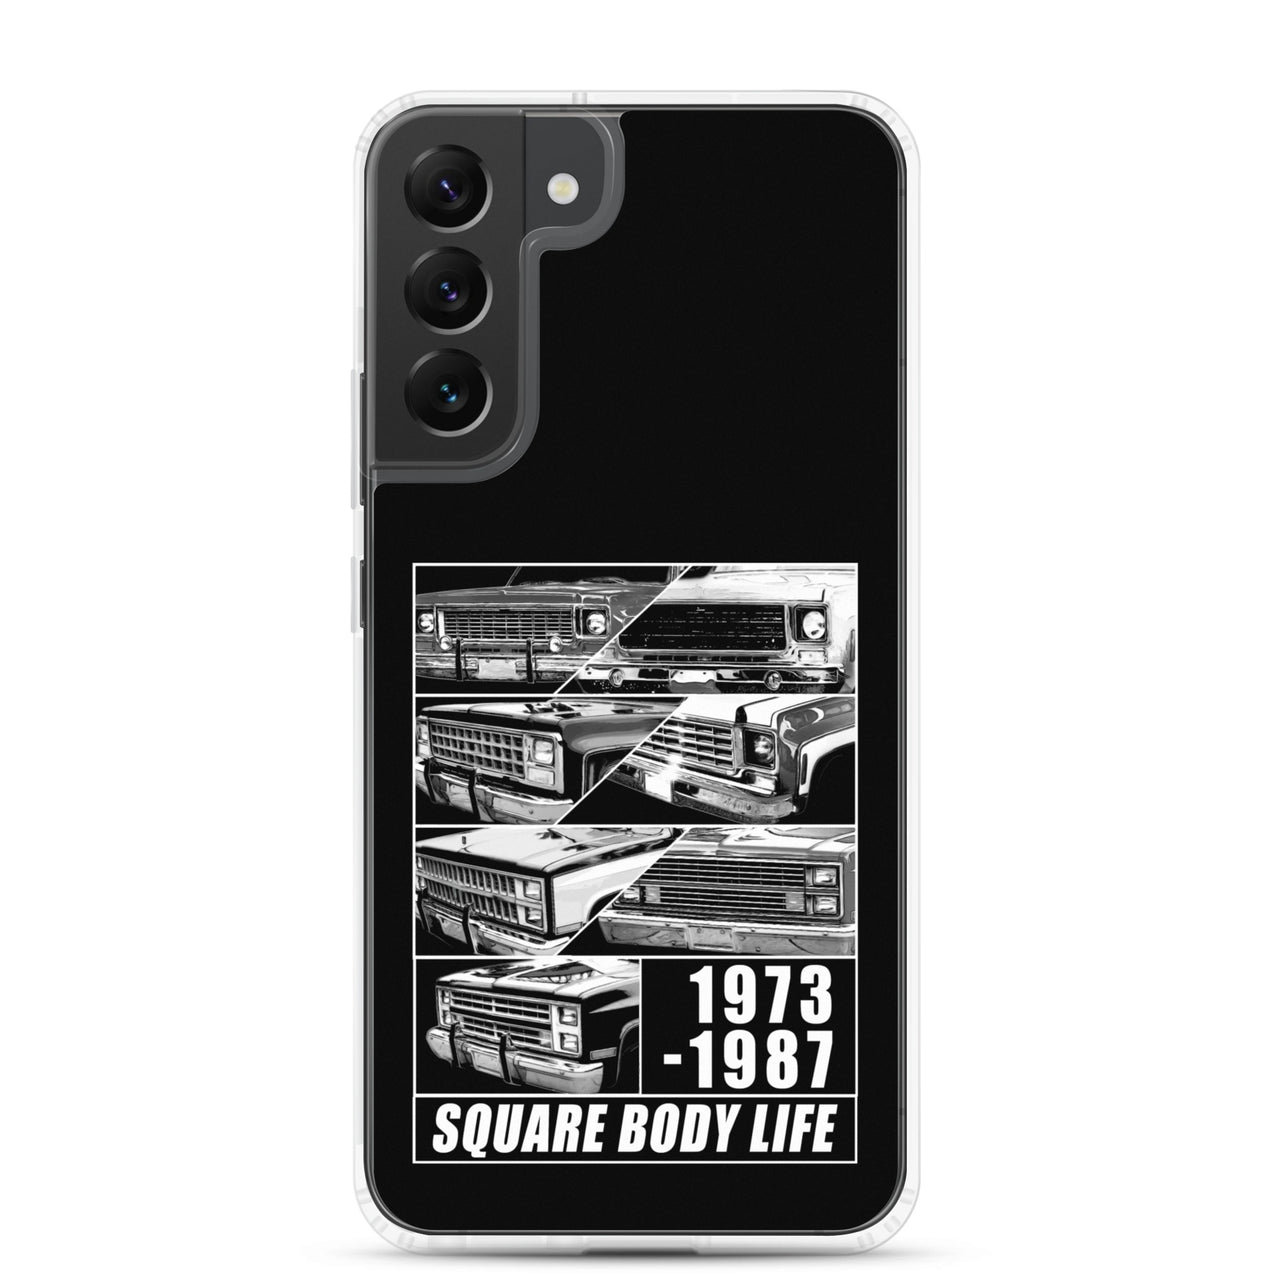 Squarebody Truck Samsung Phone Case For S22 plus